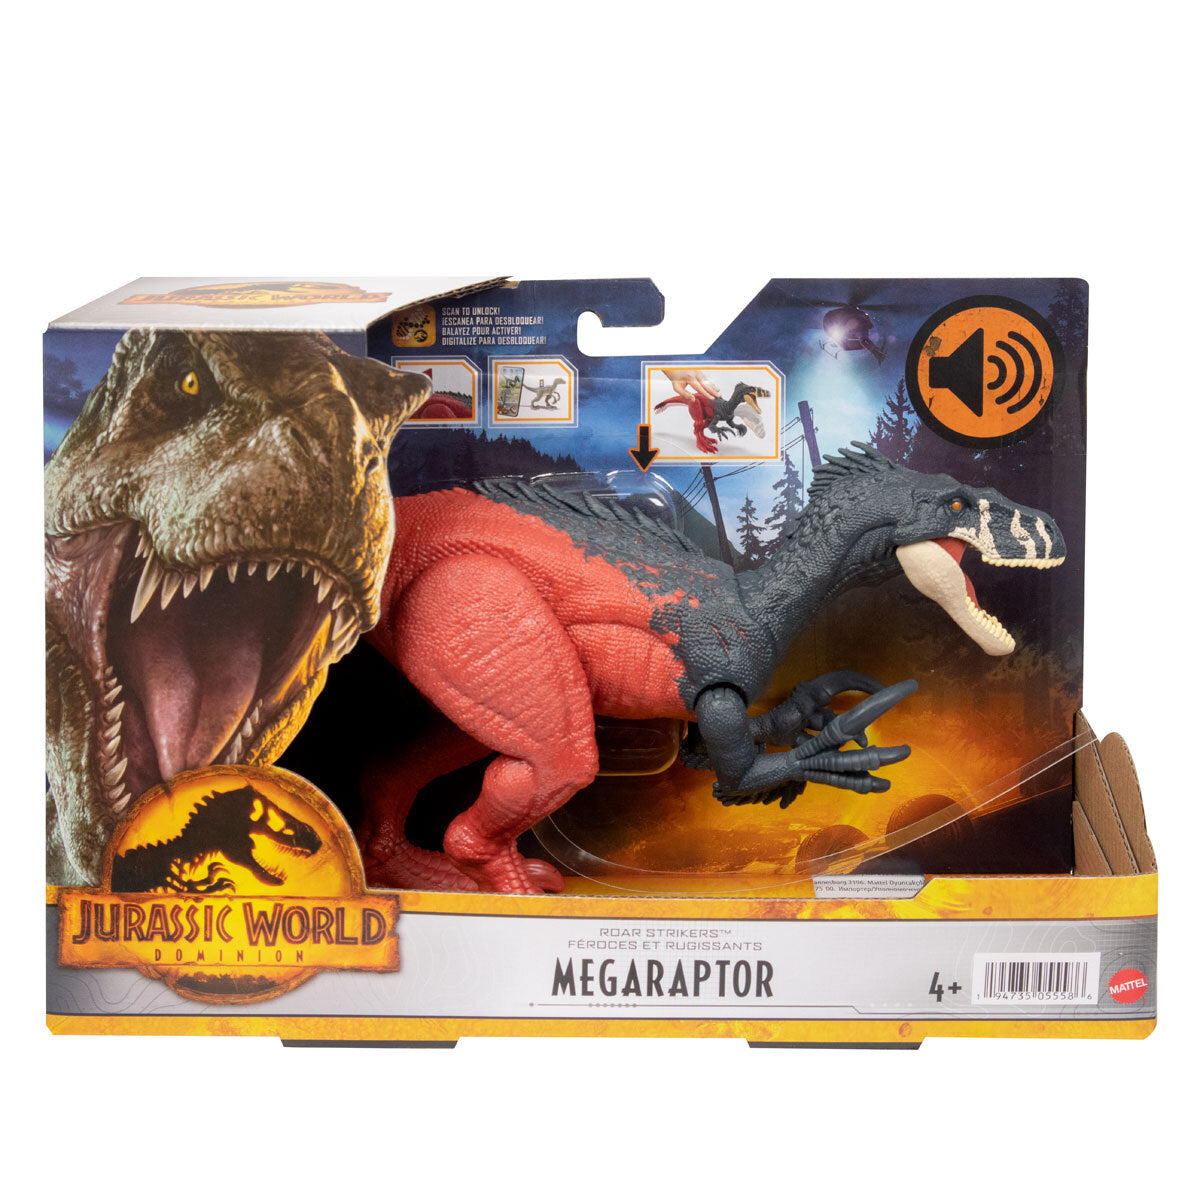 Jurassic World Megaraptor Dinosaur Figure